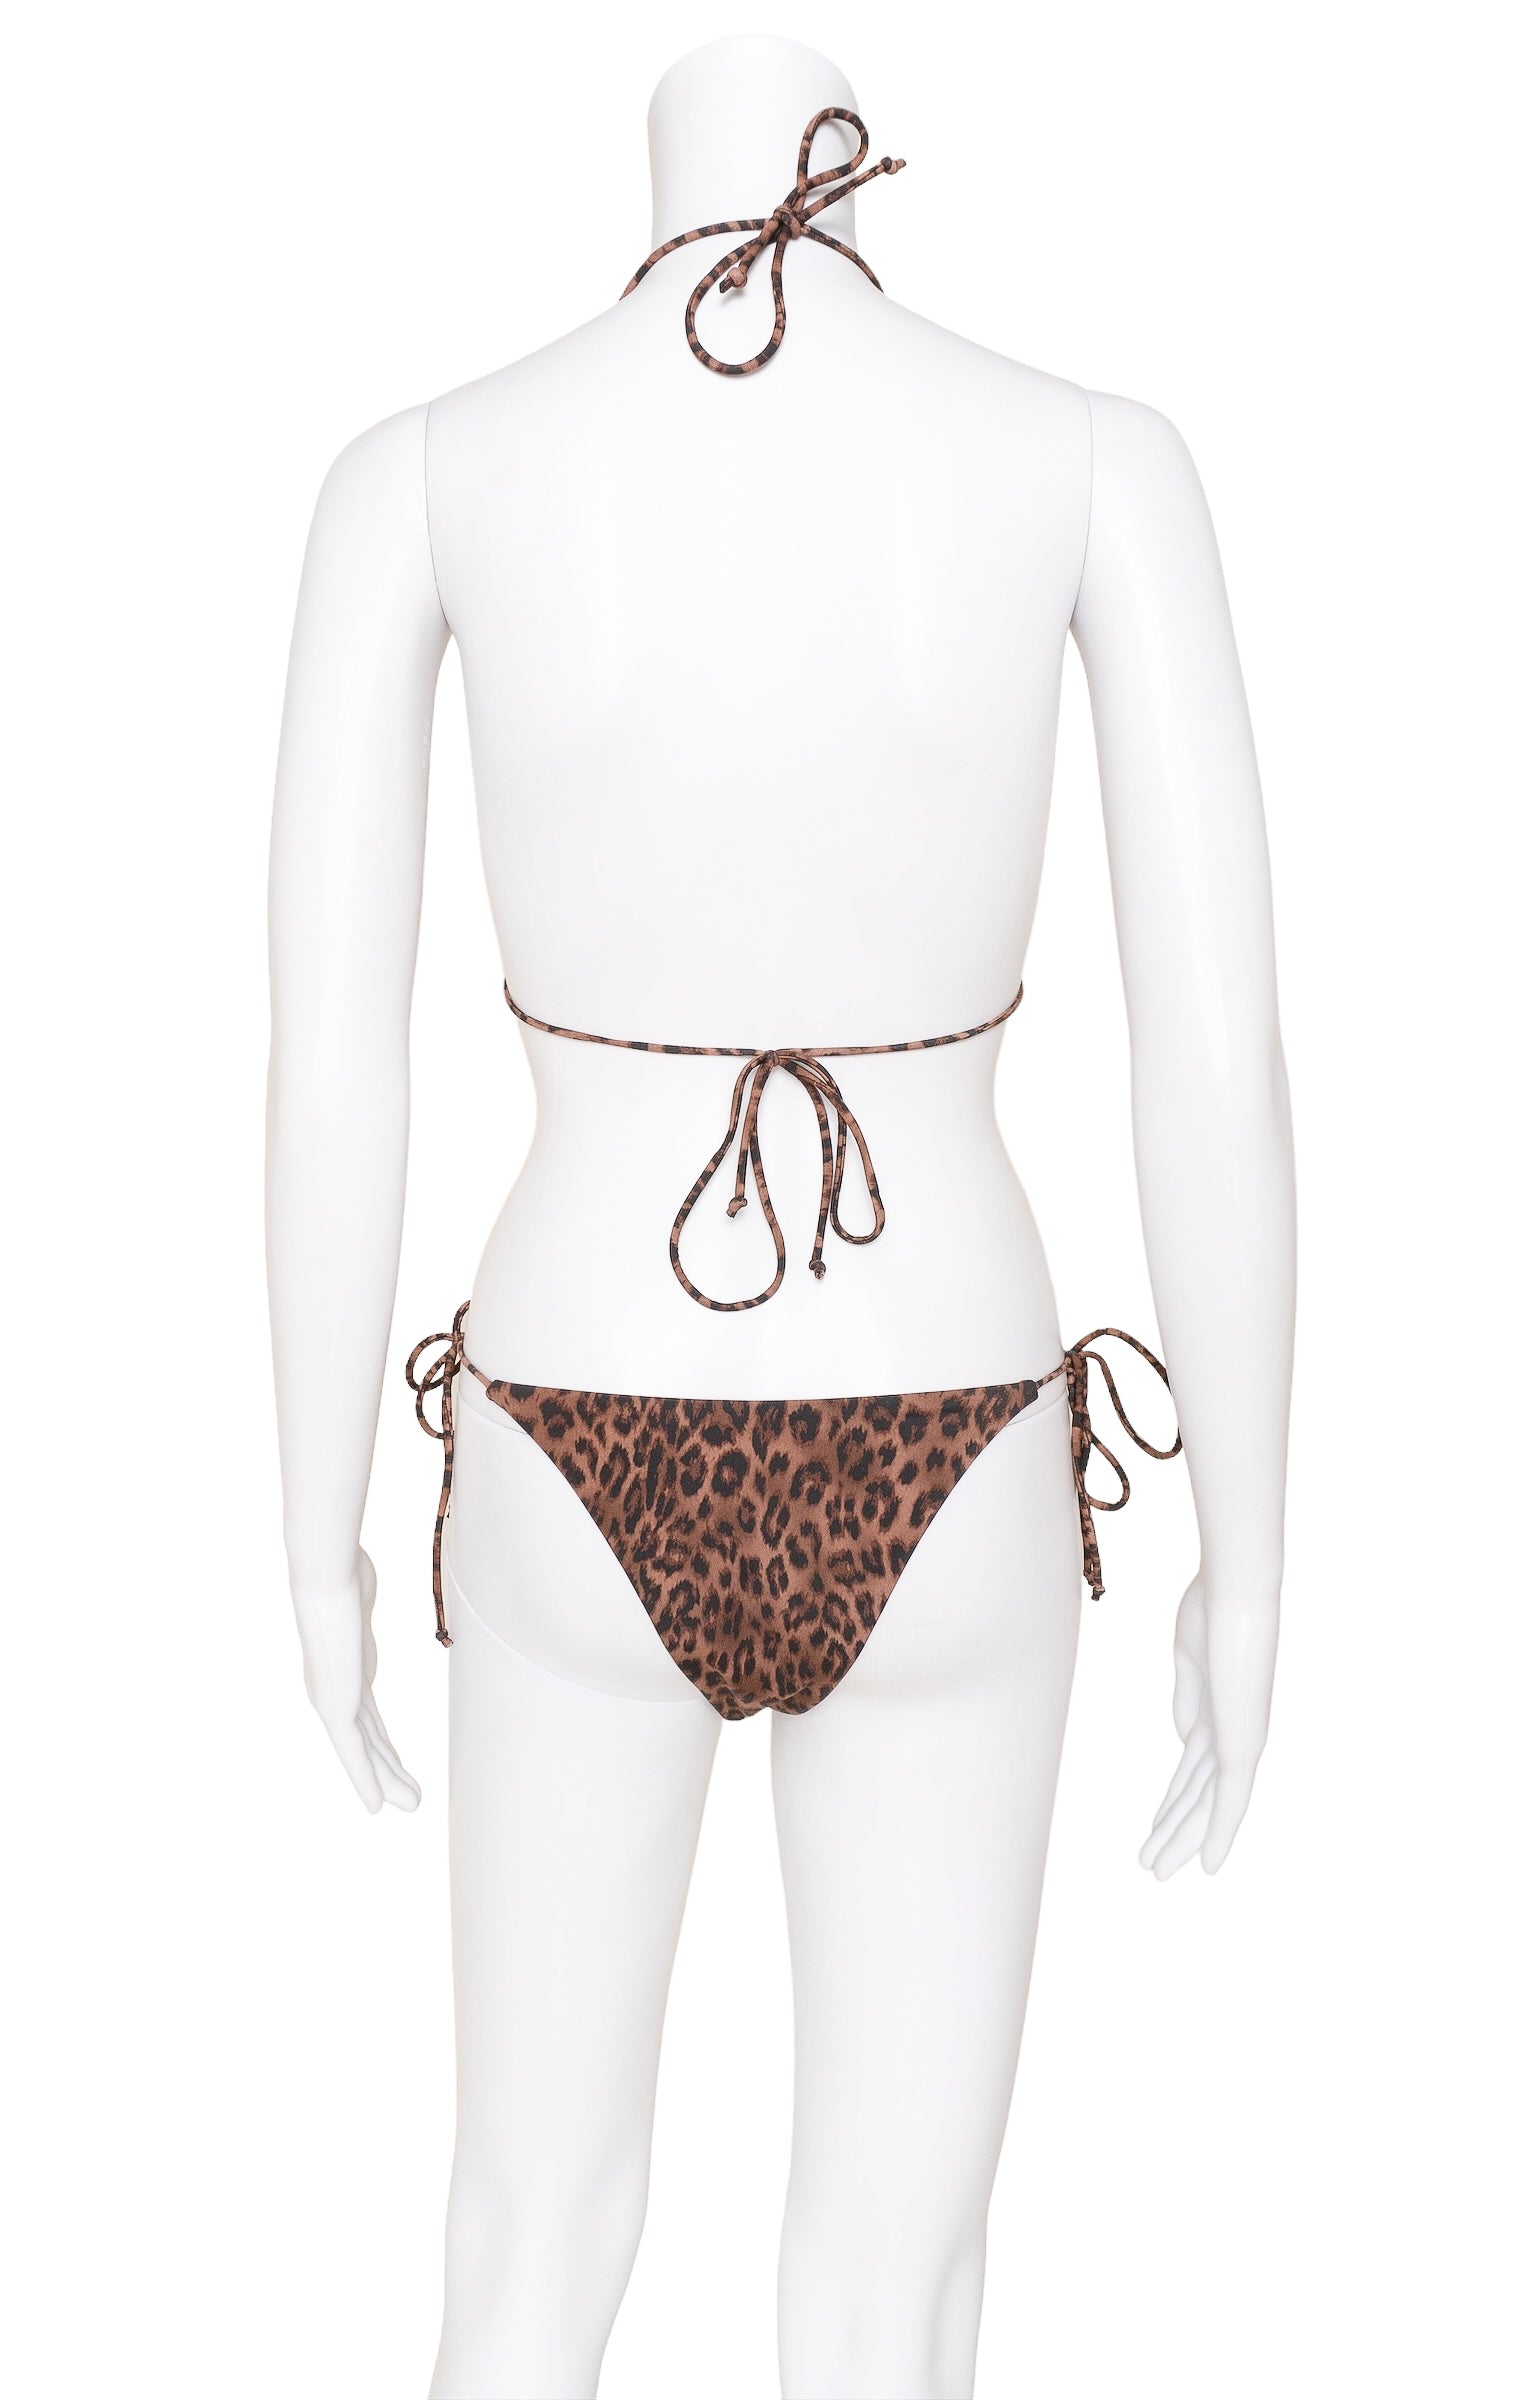 ARK SWIMWEAR (NEW) Bikini Set Size: Top - No size tags, fits like S Bottoms - Marked L but fit like OSFM